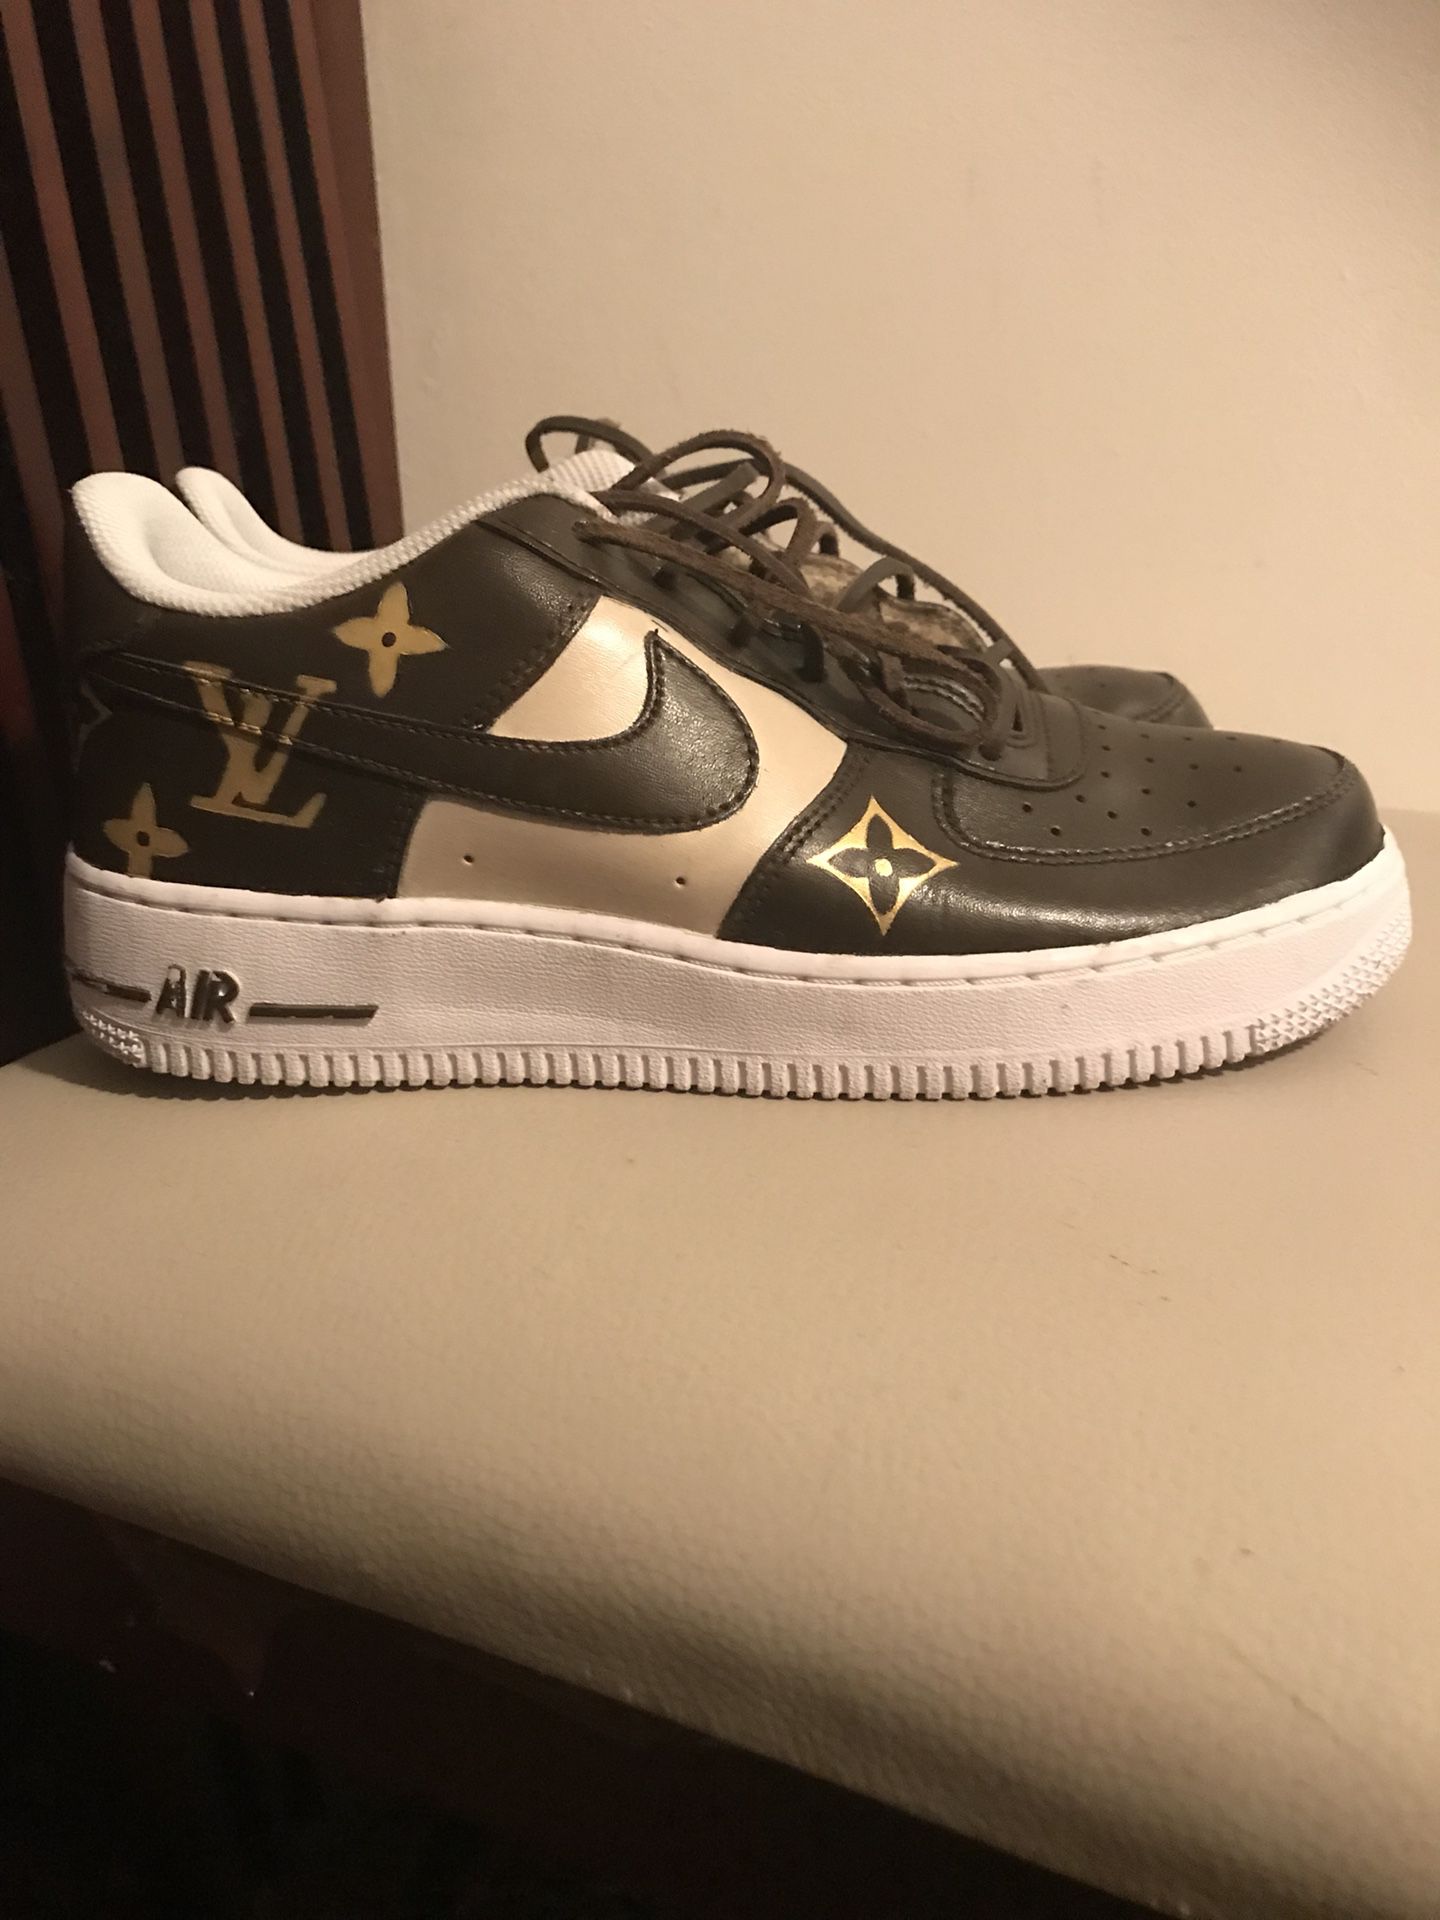 Louis Vuitton Custom Air Force 1 Sneakers 